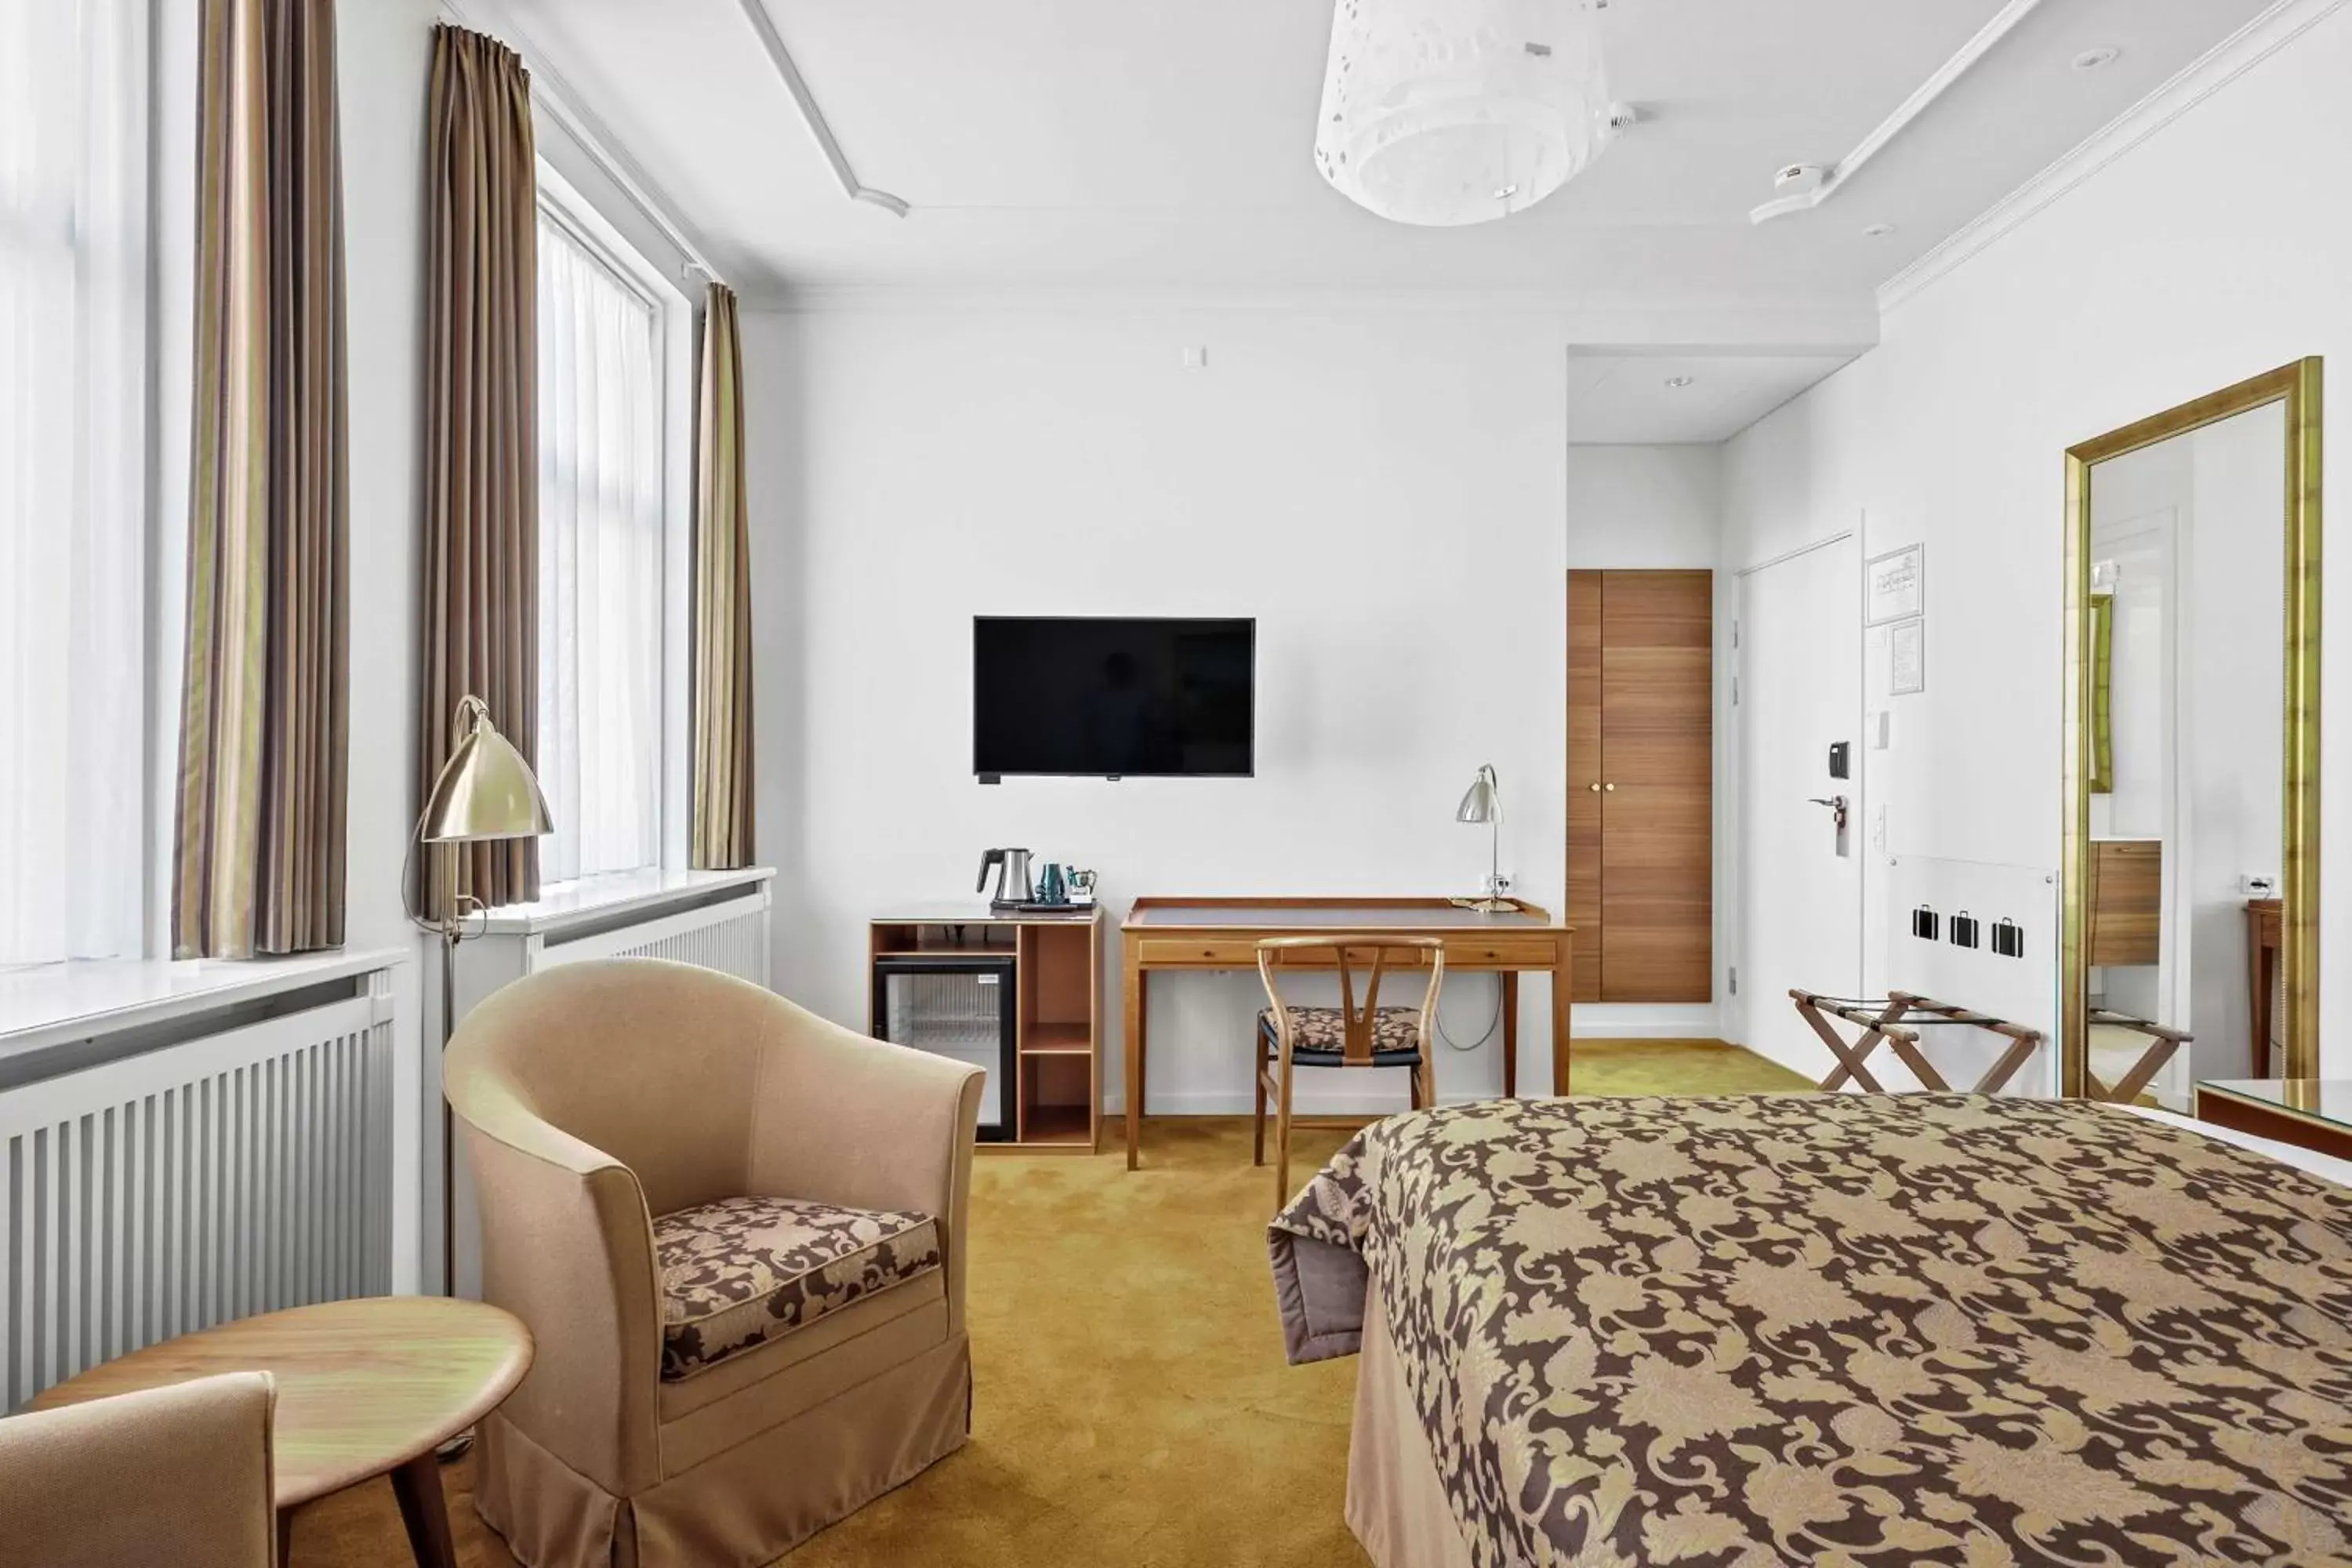 Bedroom, TV/Entertainment Center in Best Western Plus Hotel Eyde